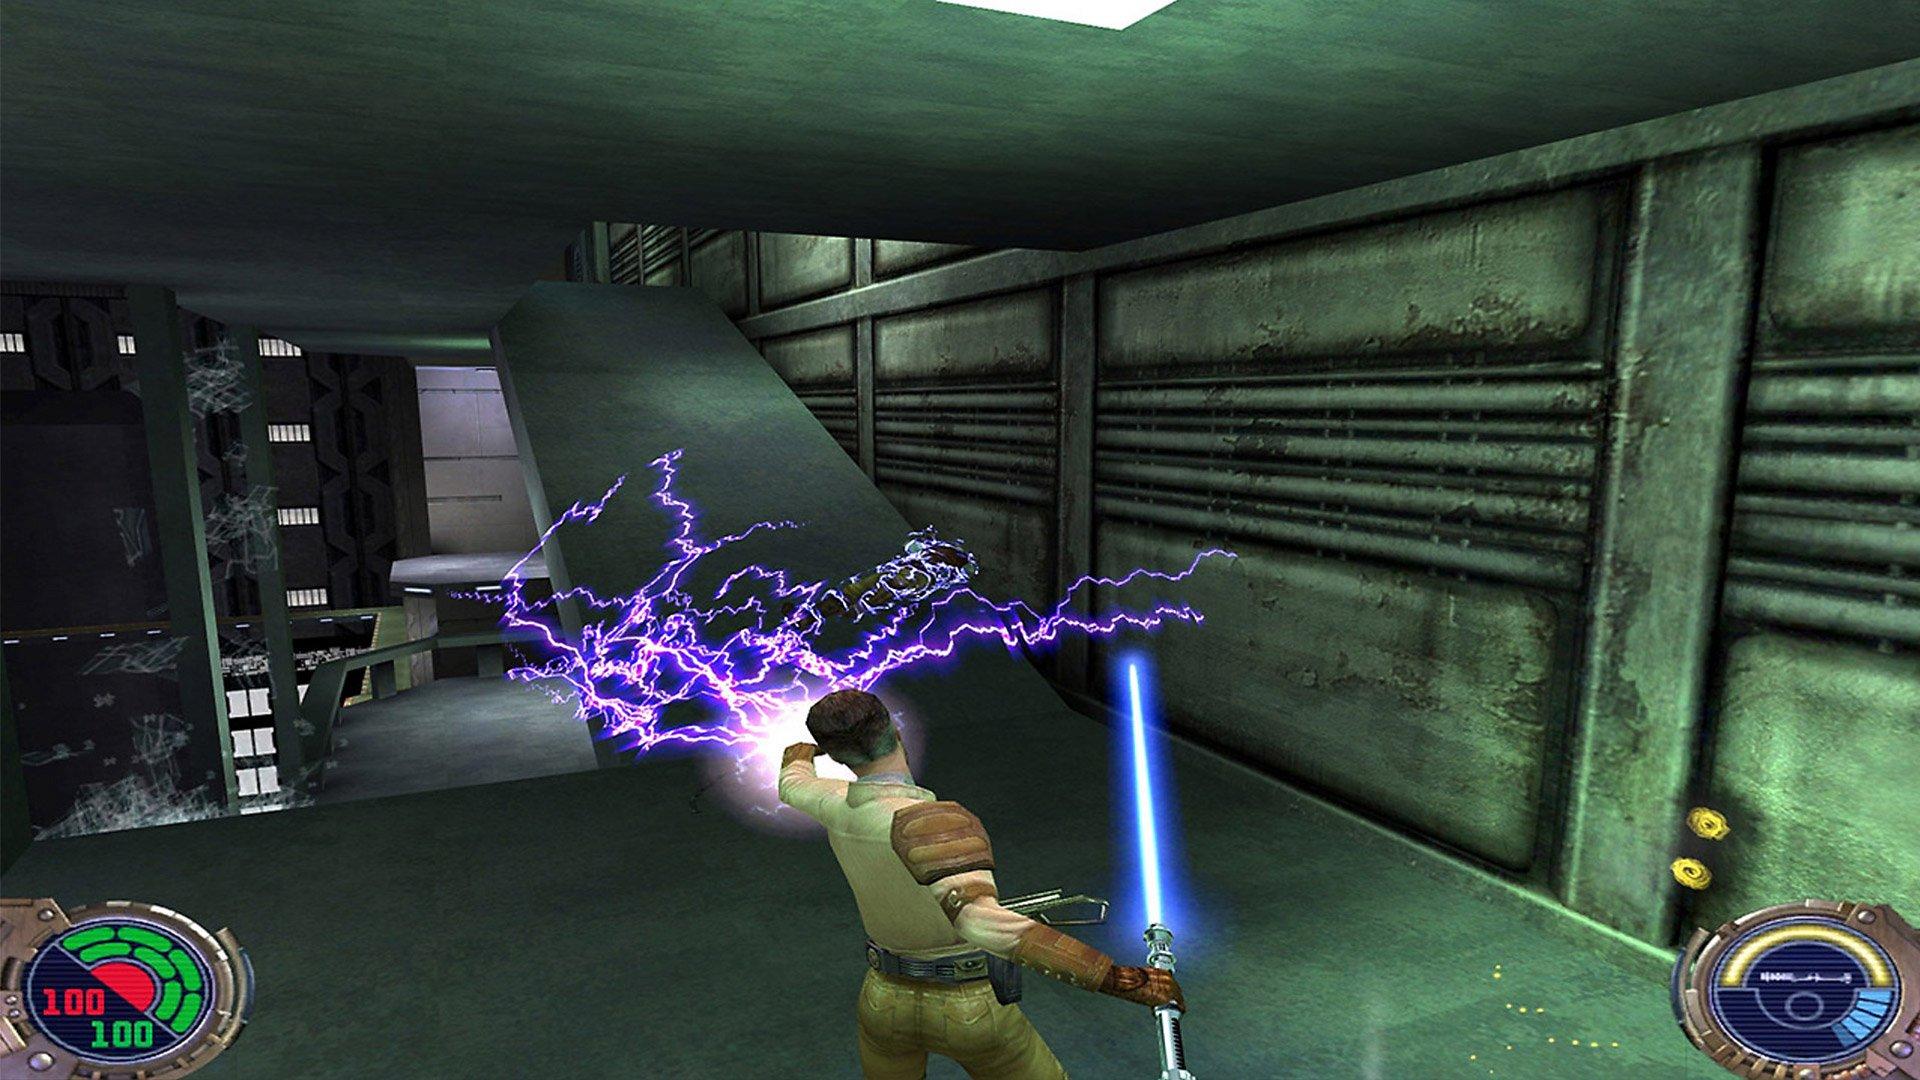 mikrocomputer parti bestøve Star Wars Jedi Knight Collection - PlayStation 4 | PlayStation 4 | GameStop